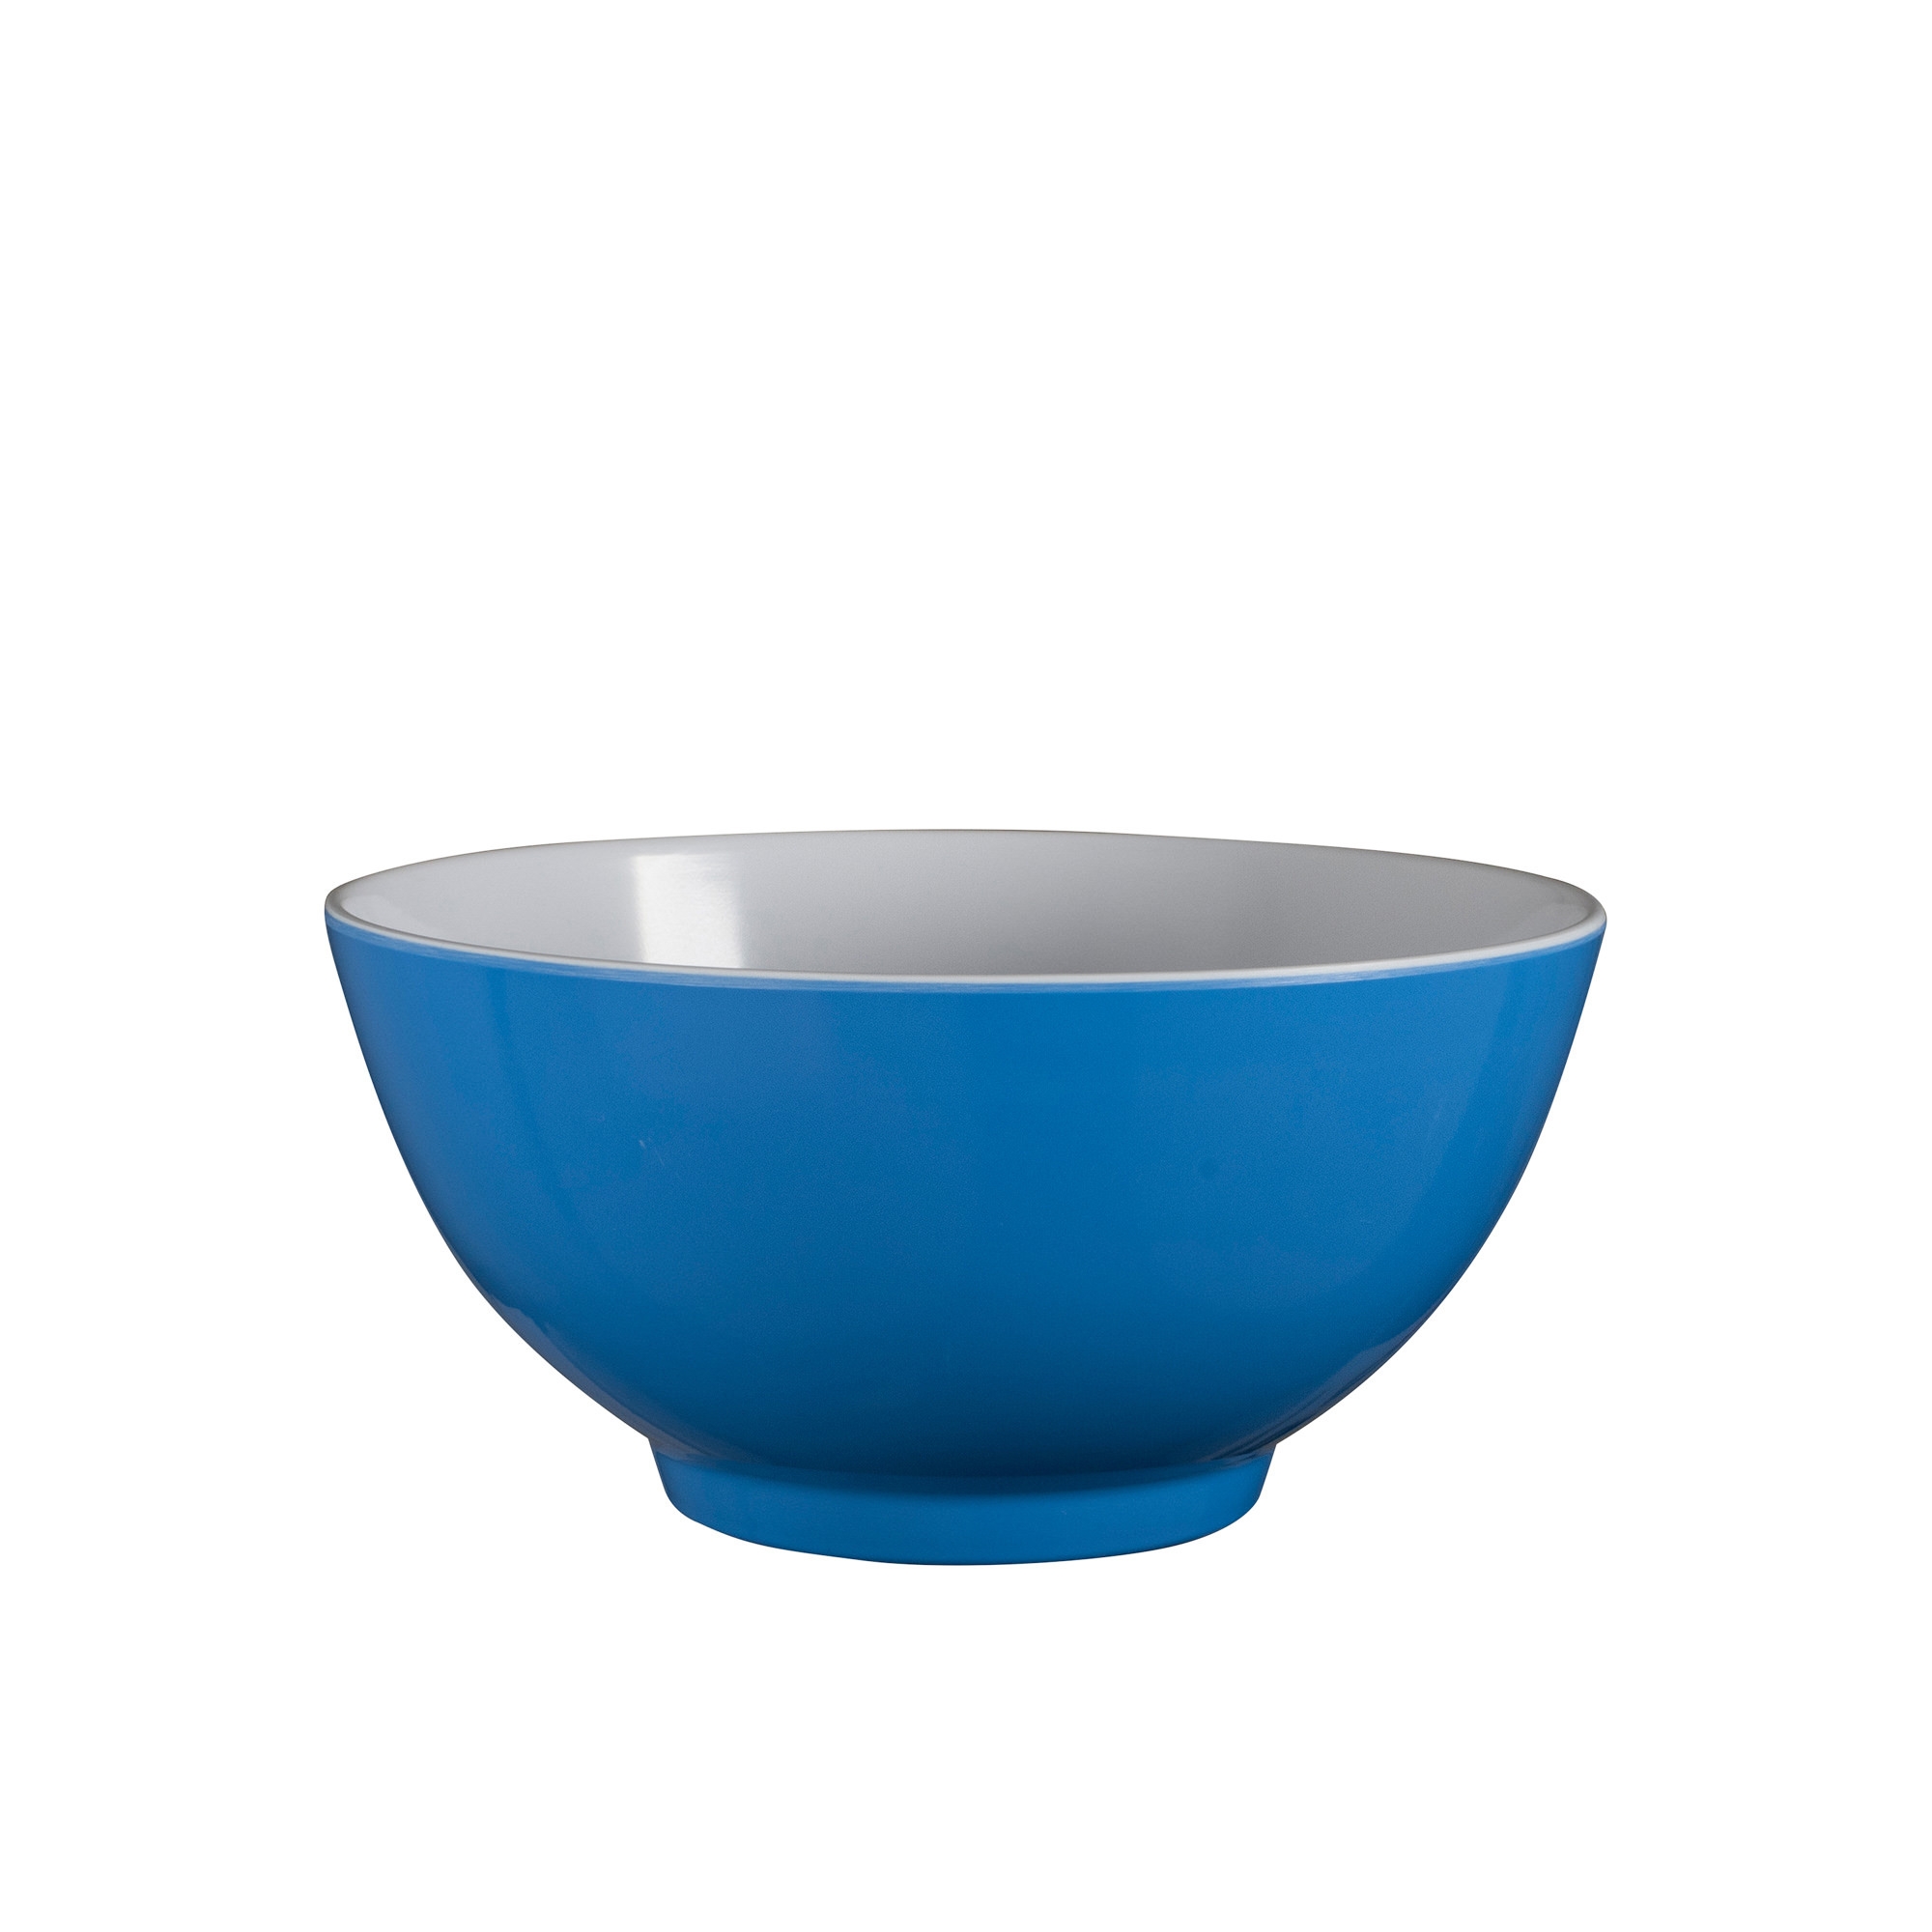 Serroni Melamine Bowl 15cm Reflex Blue Image 1